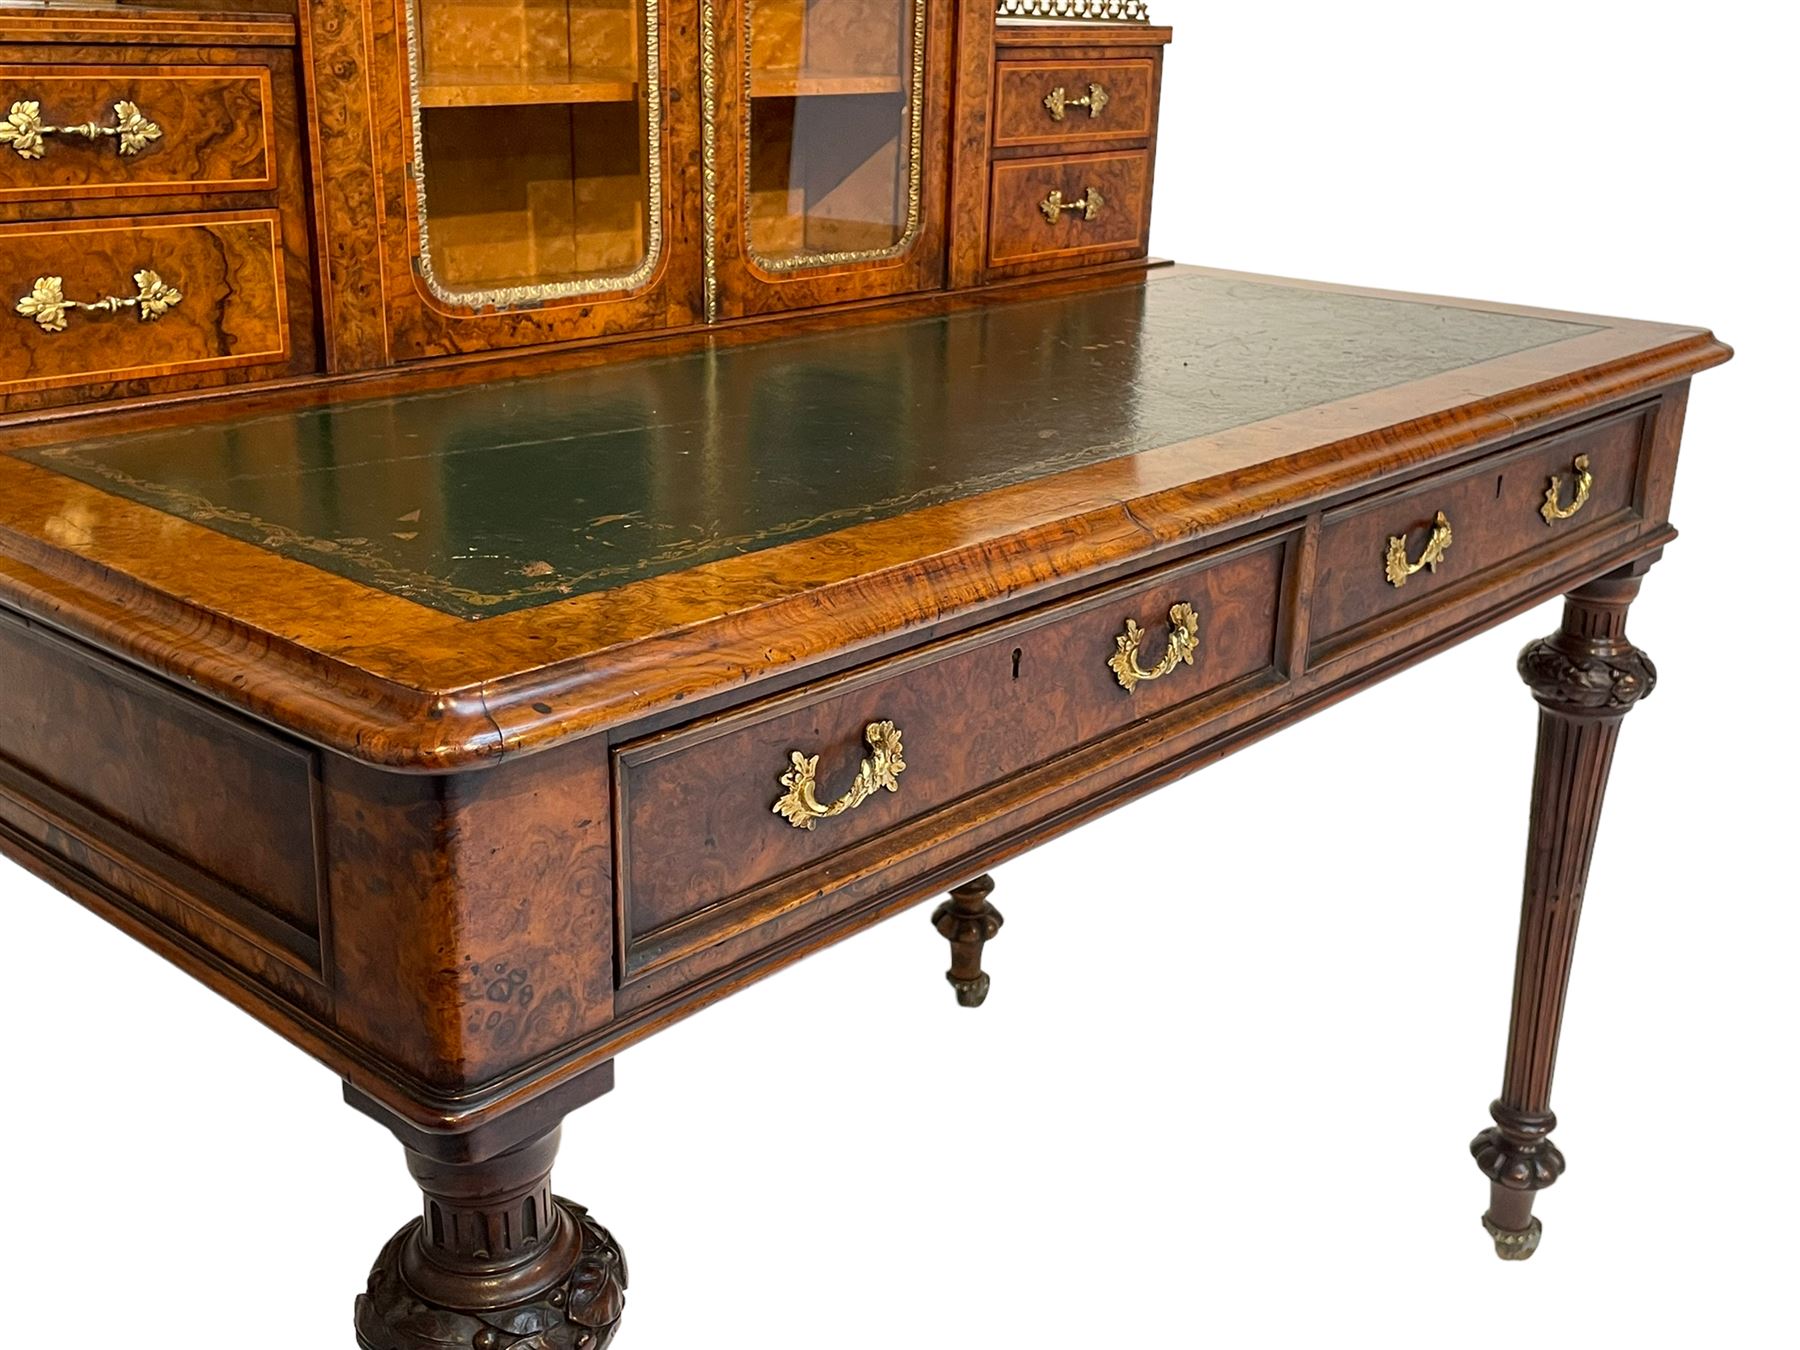 19th century figured walnut lady's writing desk or Bonheur du Jour - Image 10 of 14